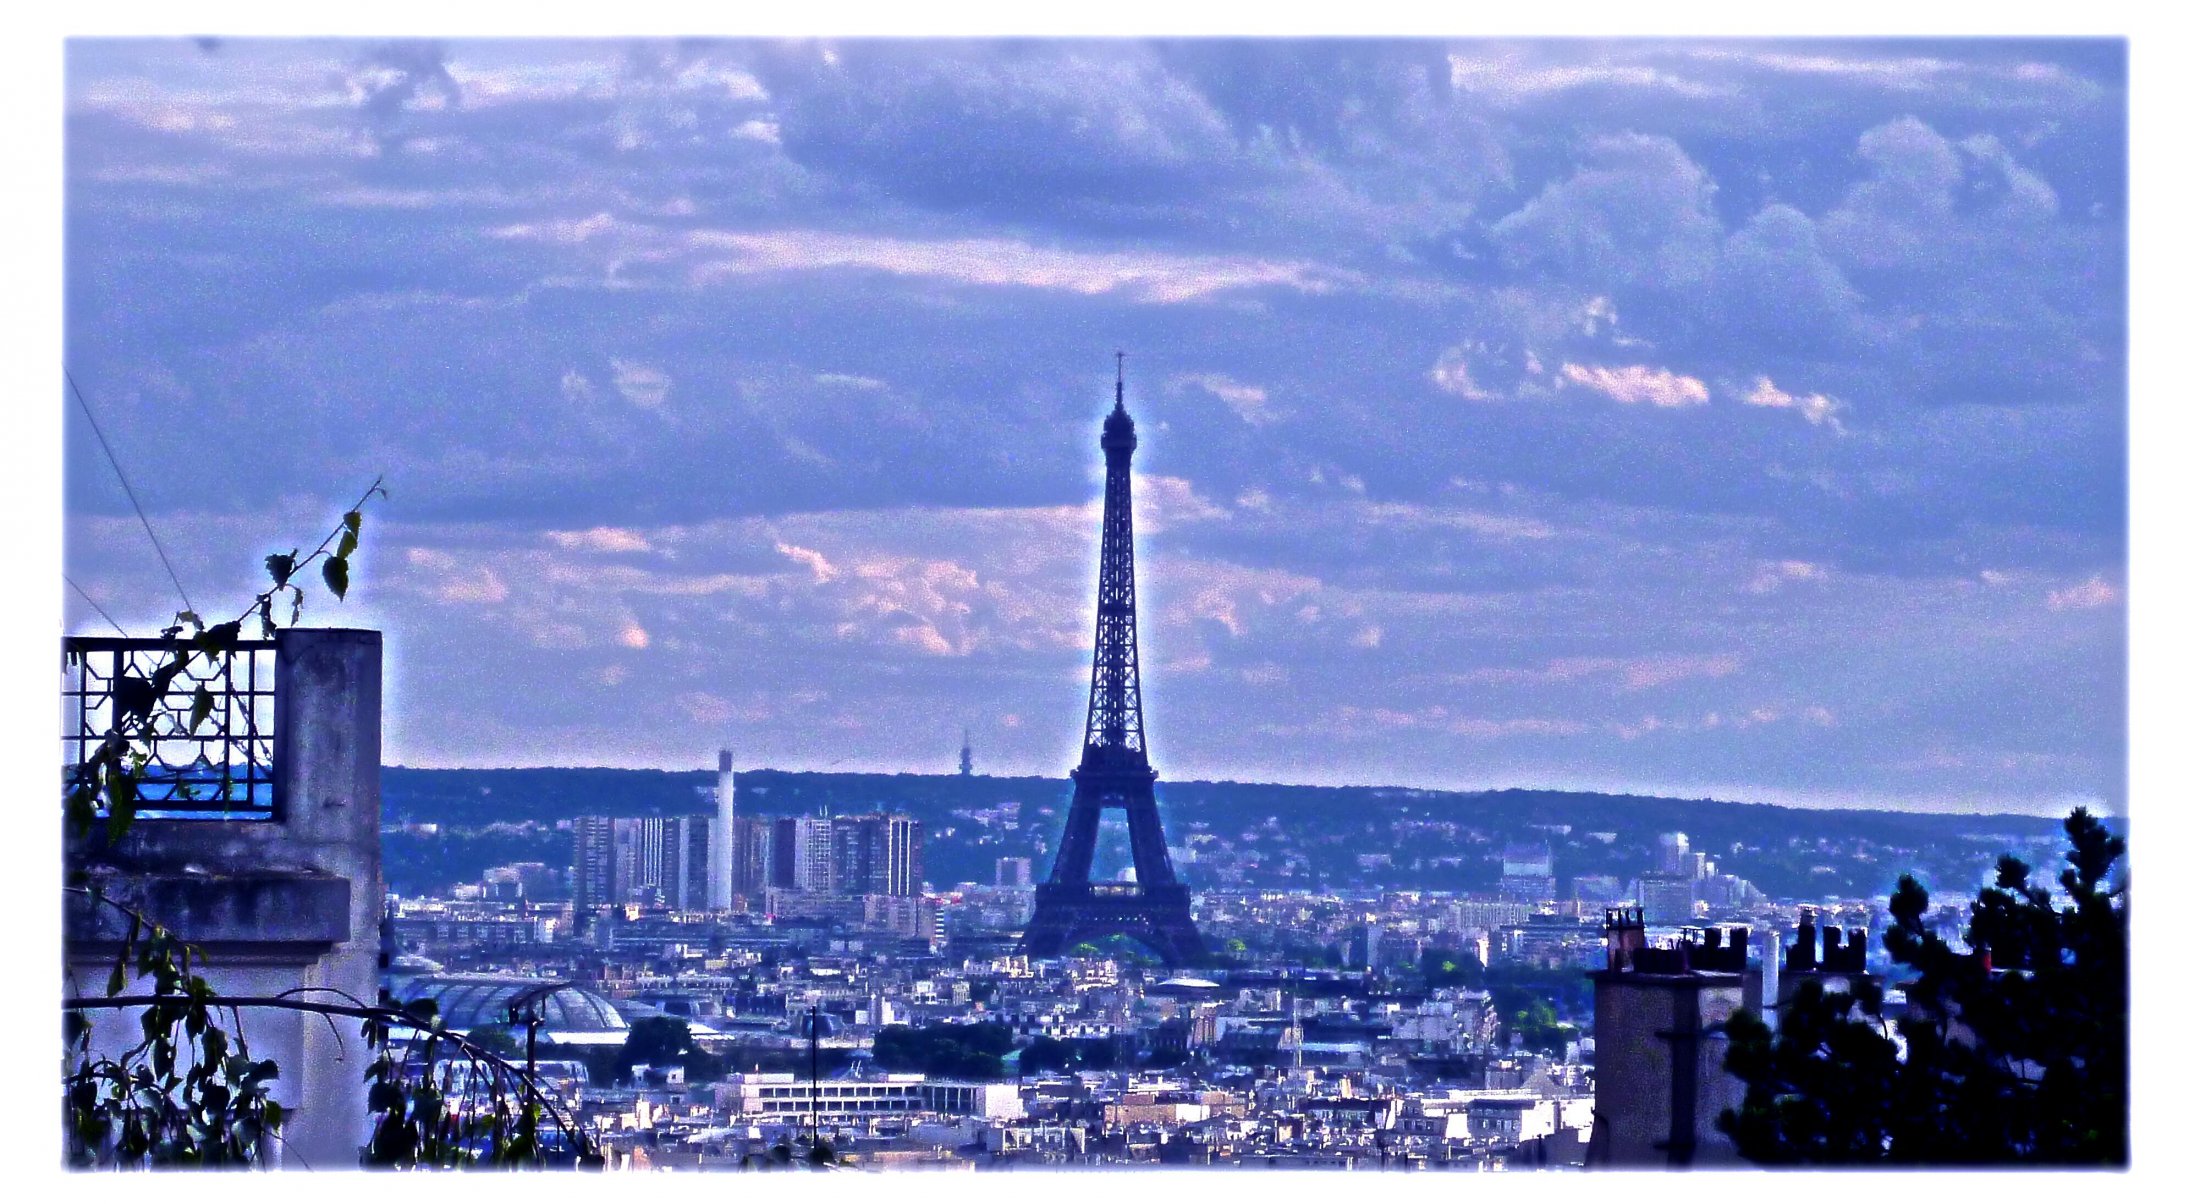  La Tour Eiffel